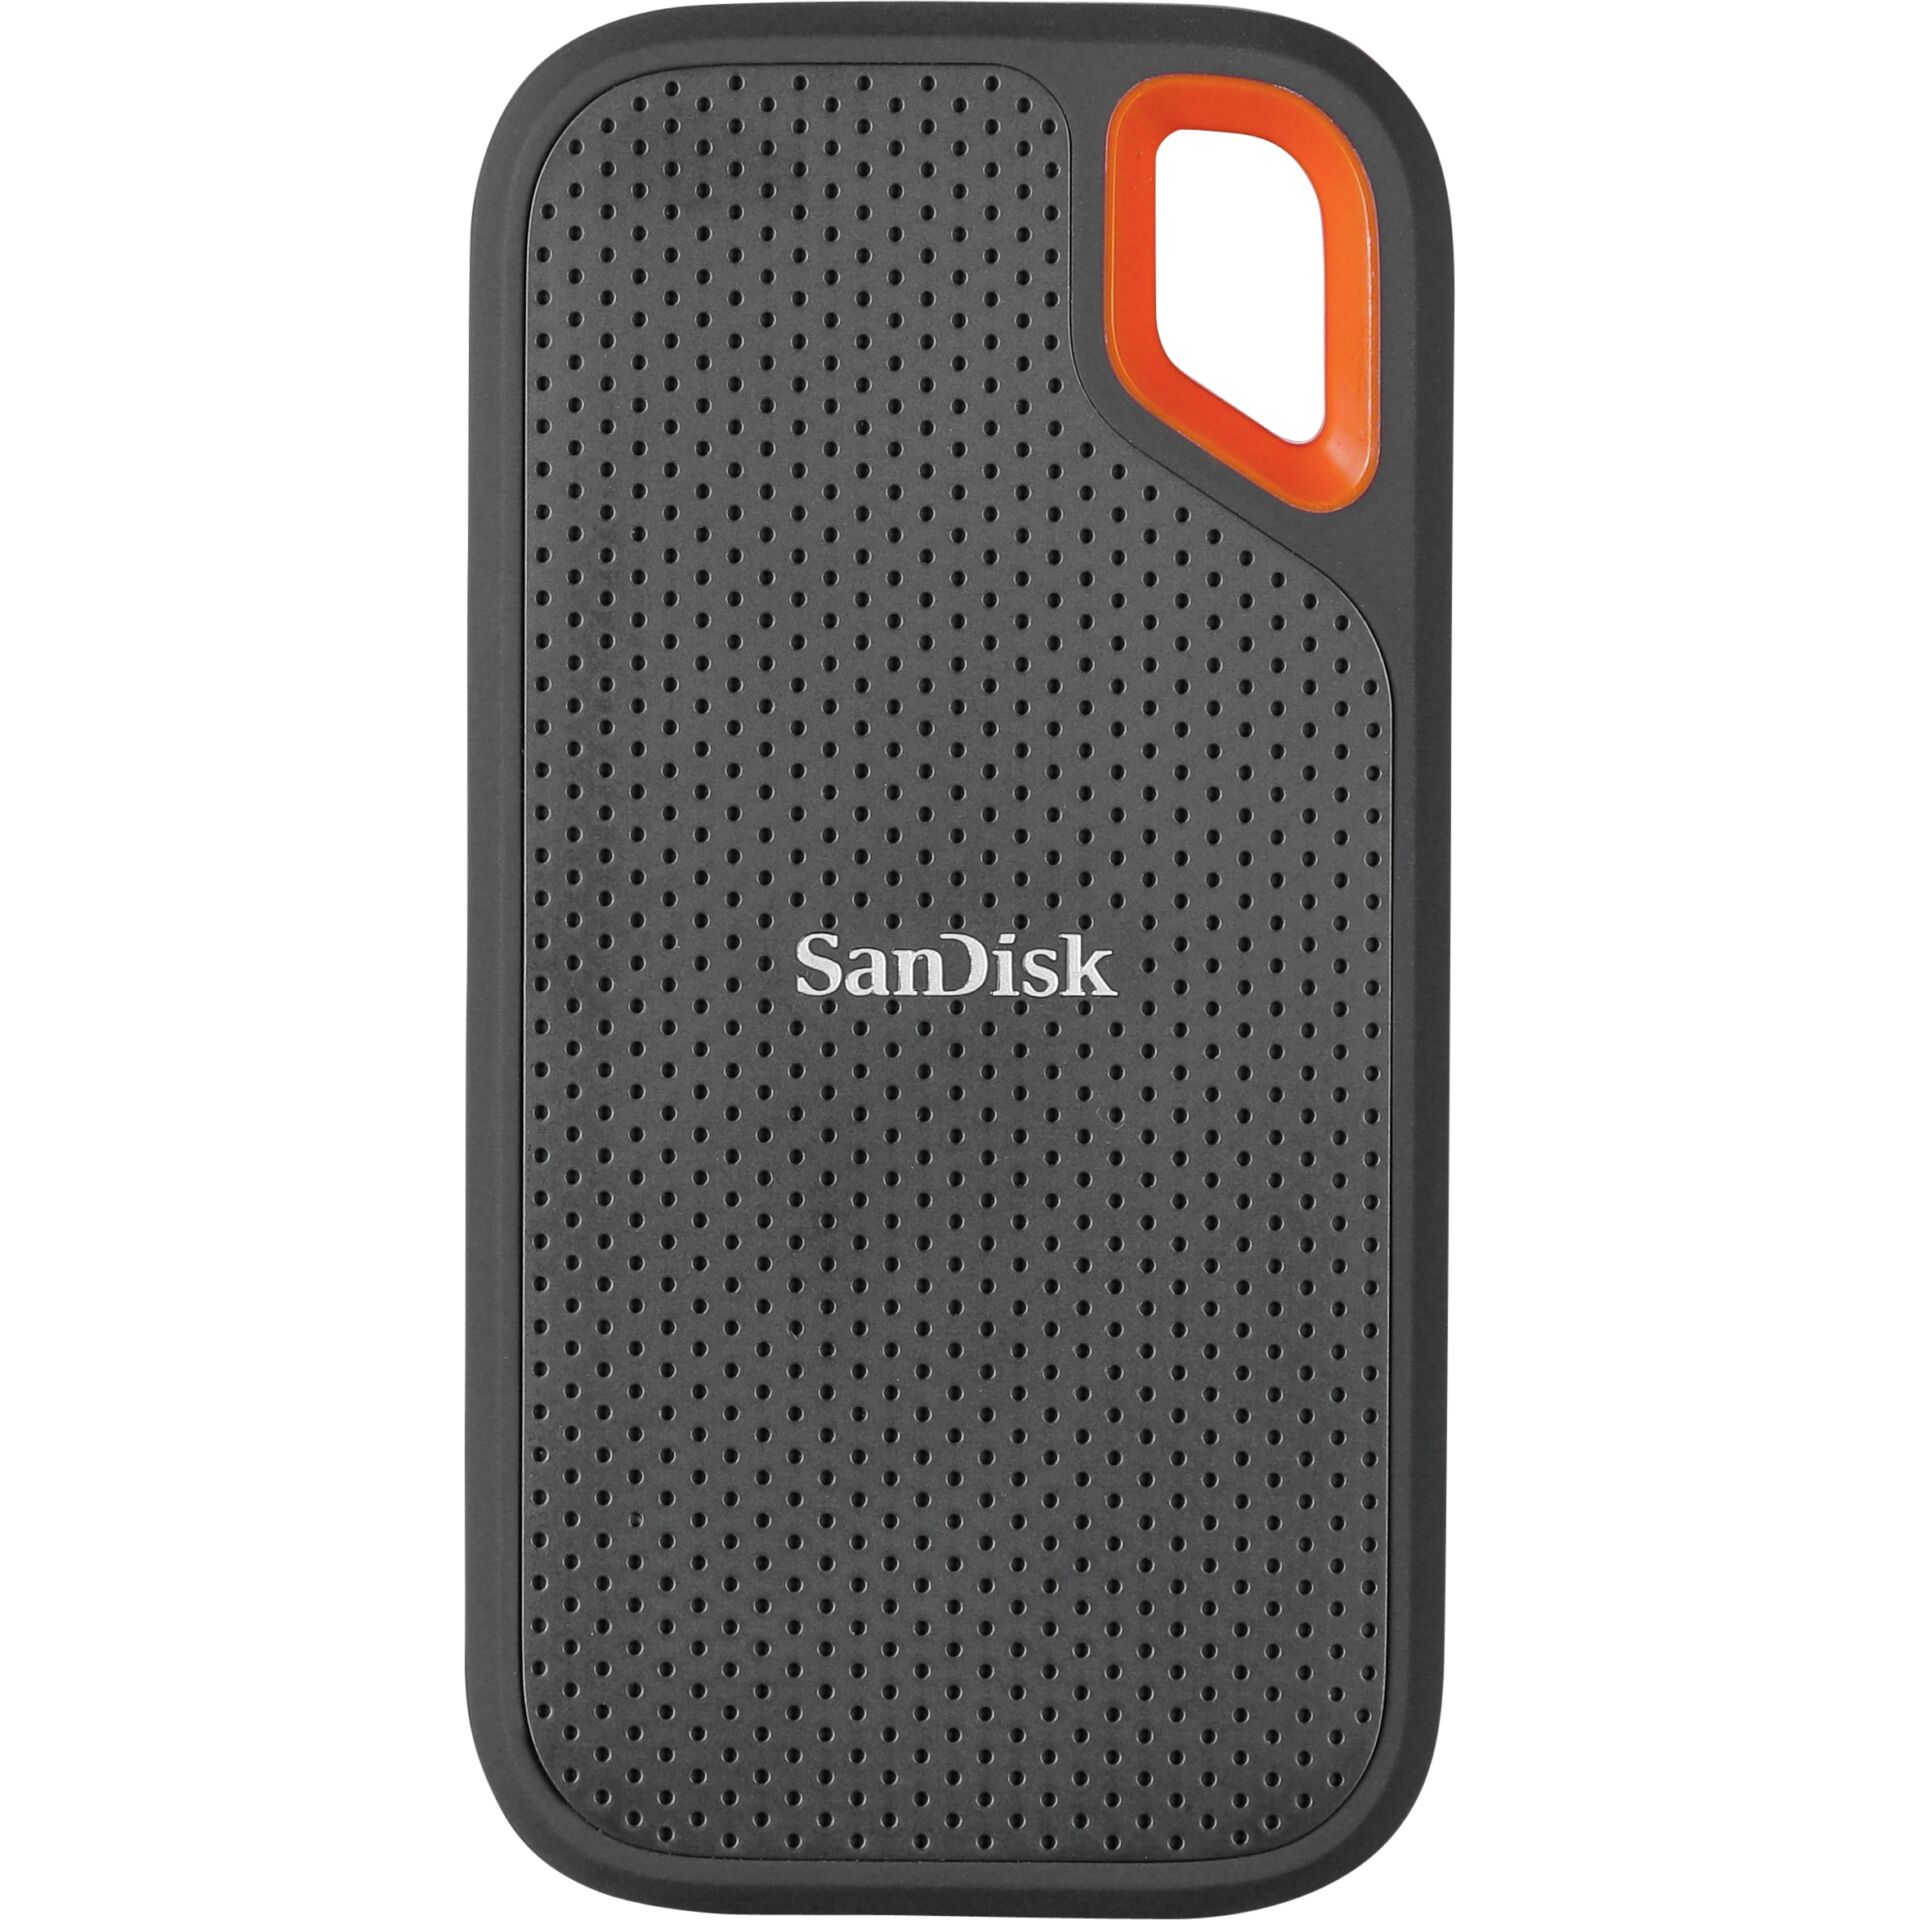 2.0 TB SanDisk Extreme Portable V2 externe SSD, 1x USB-C 3.1 